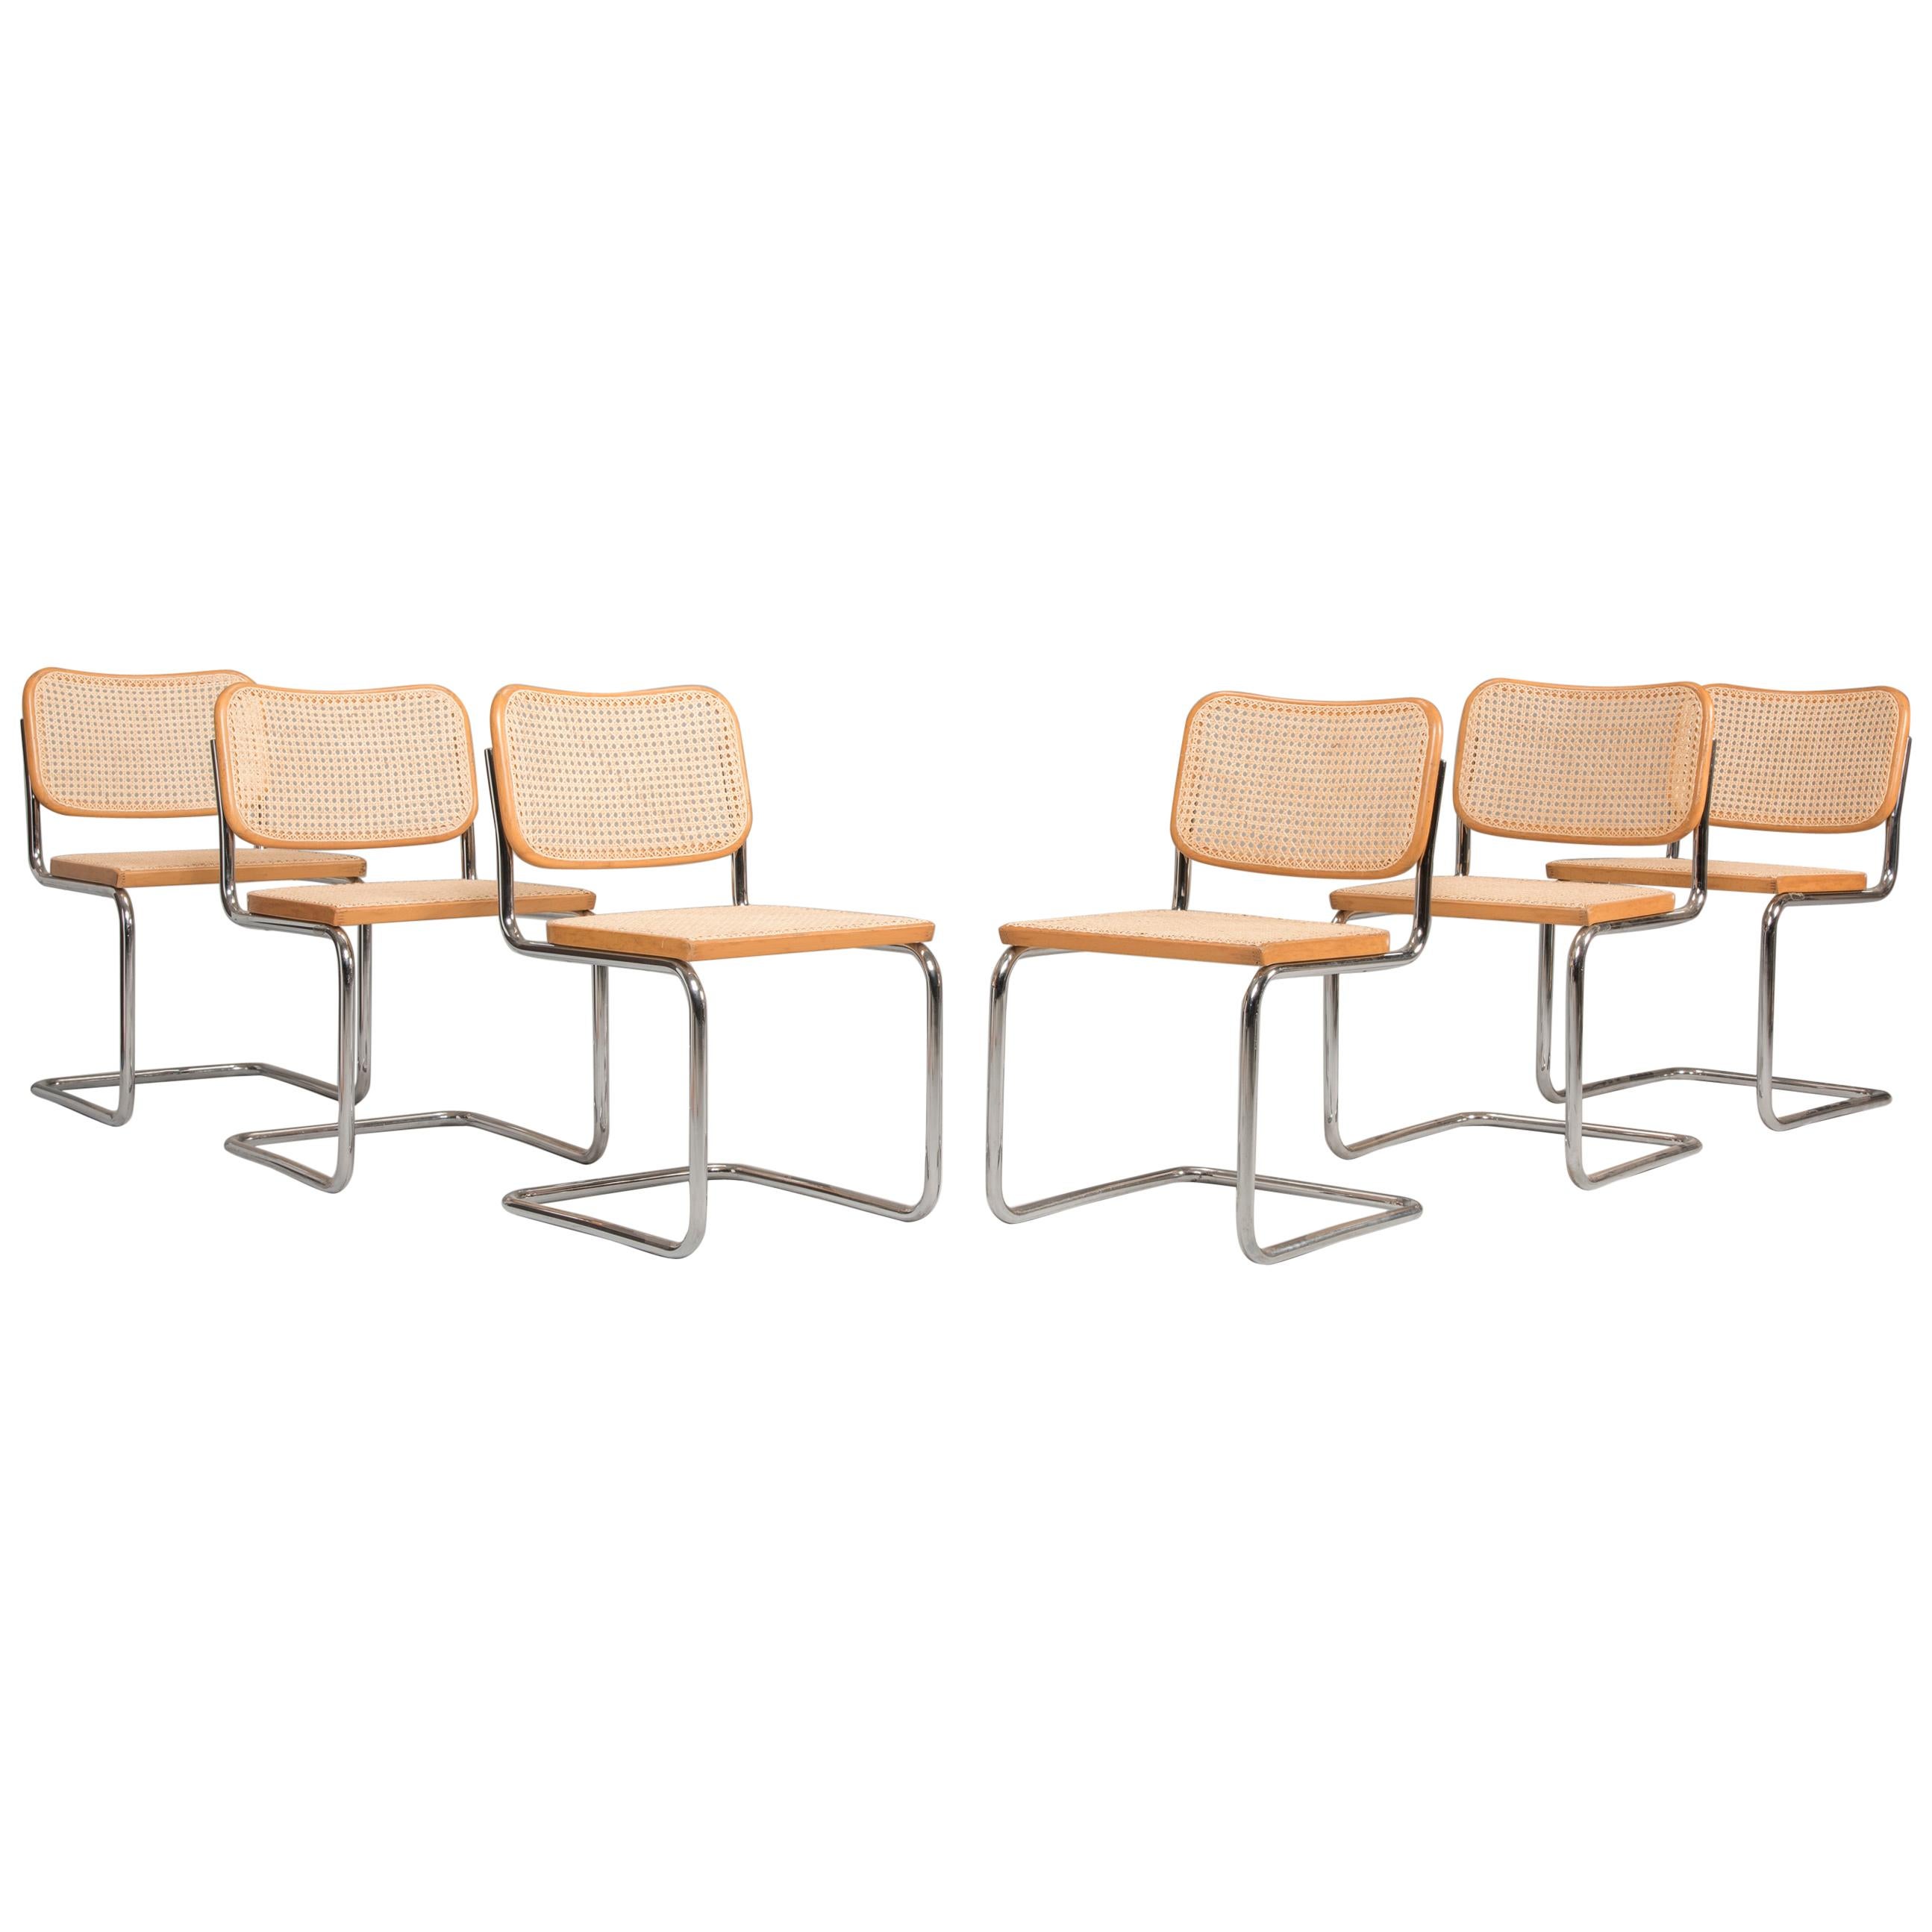 Breuer for Gavina Original Cane Seat Tubular Steel Cesca Chairs 1960s, Set of 6